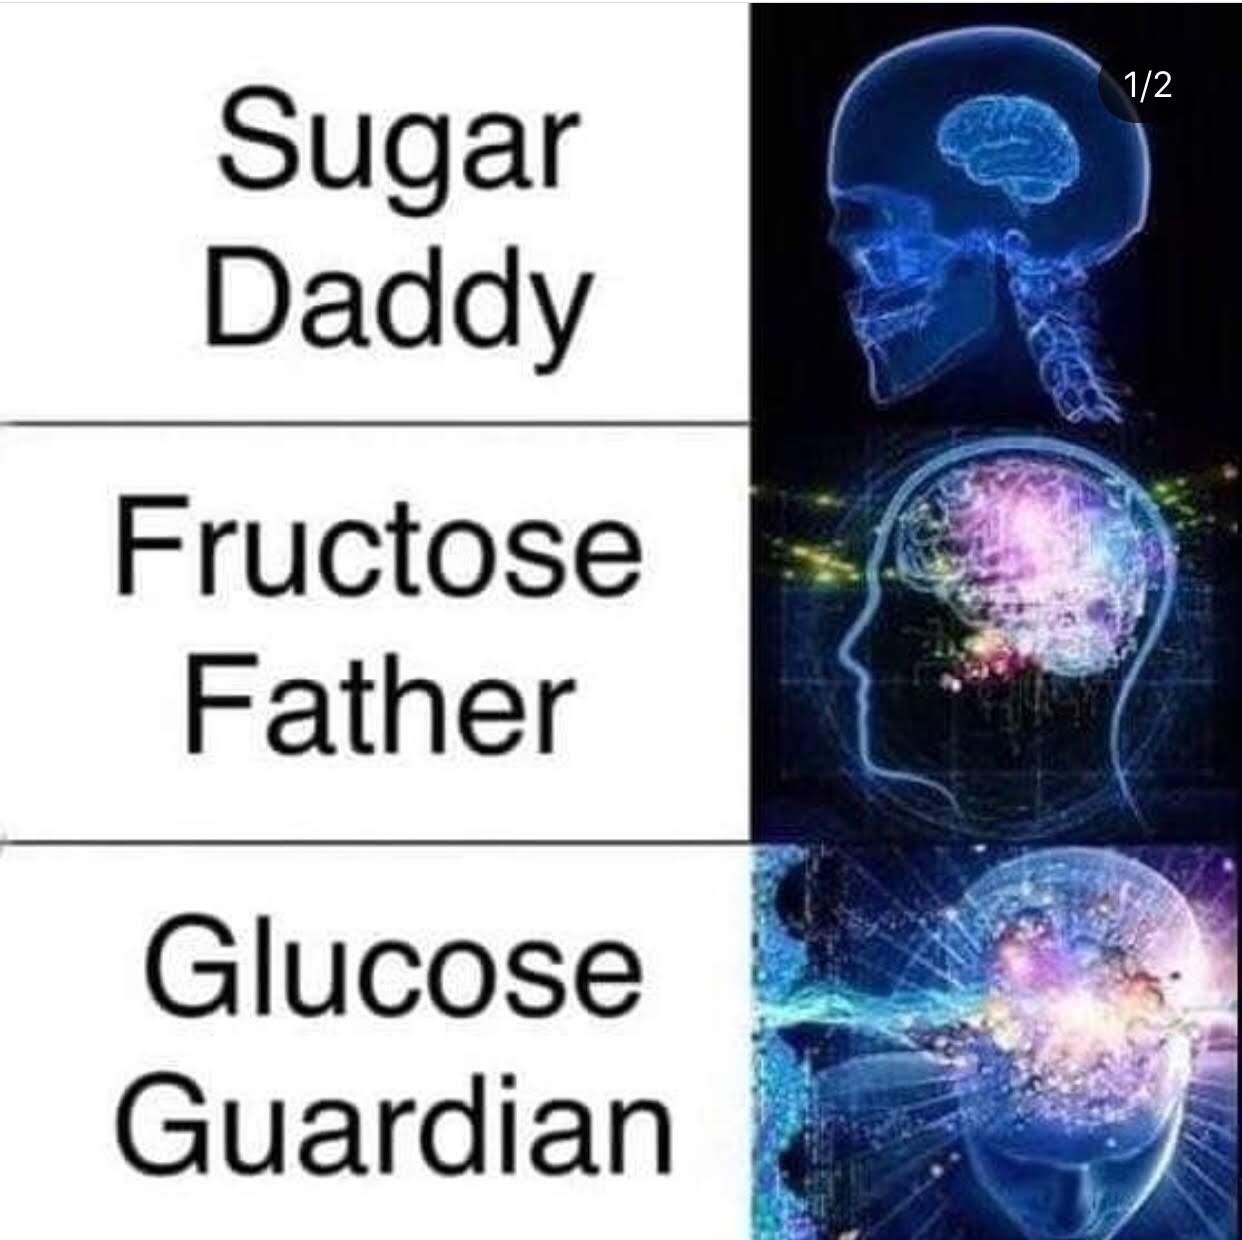 glucose guardian - 112 Sugar Daddy Fructose Father Glucose Guardian